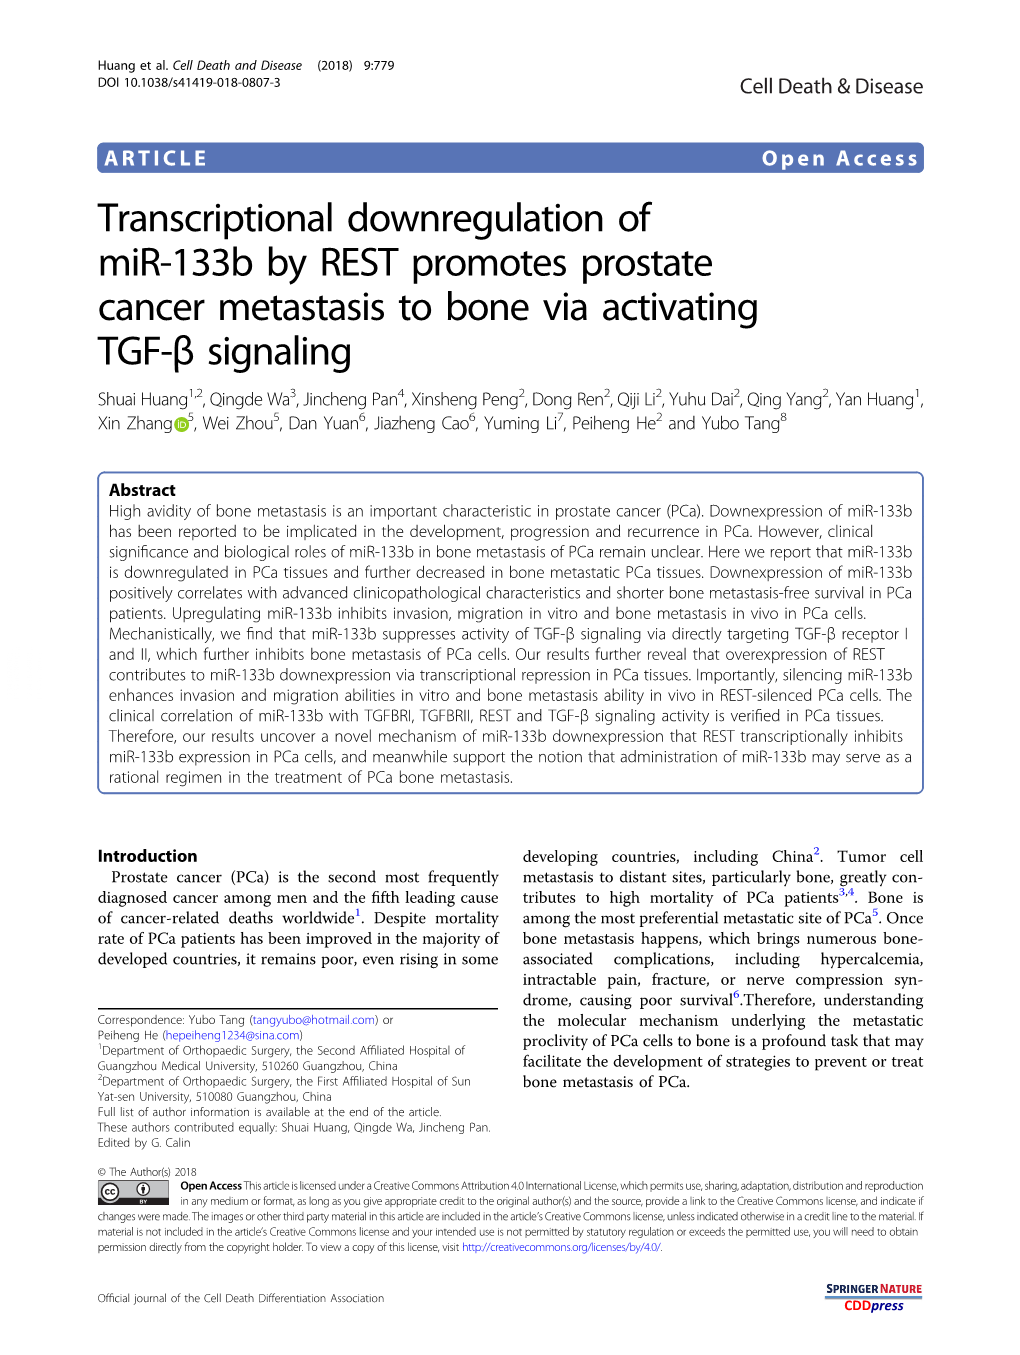 Transcriptional Downregulation of Mir-133B by REST Promotes Prostate